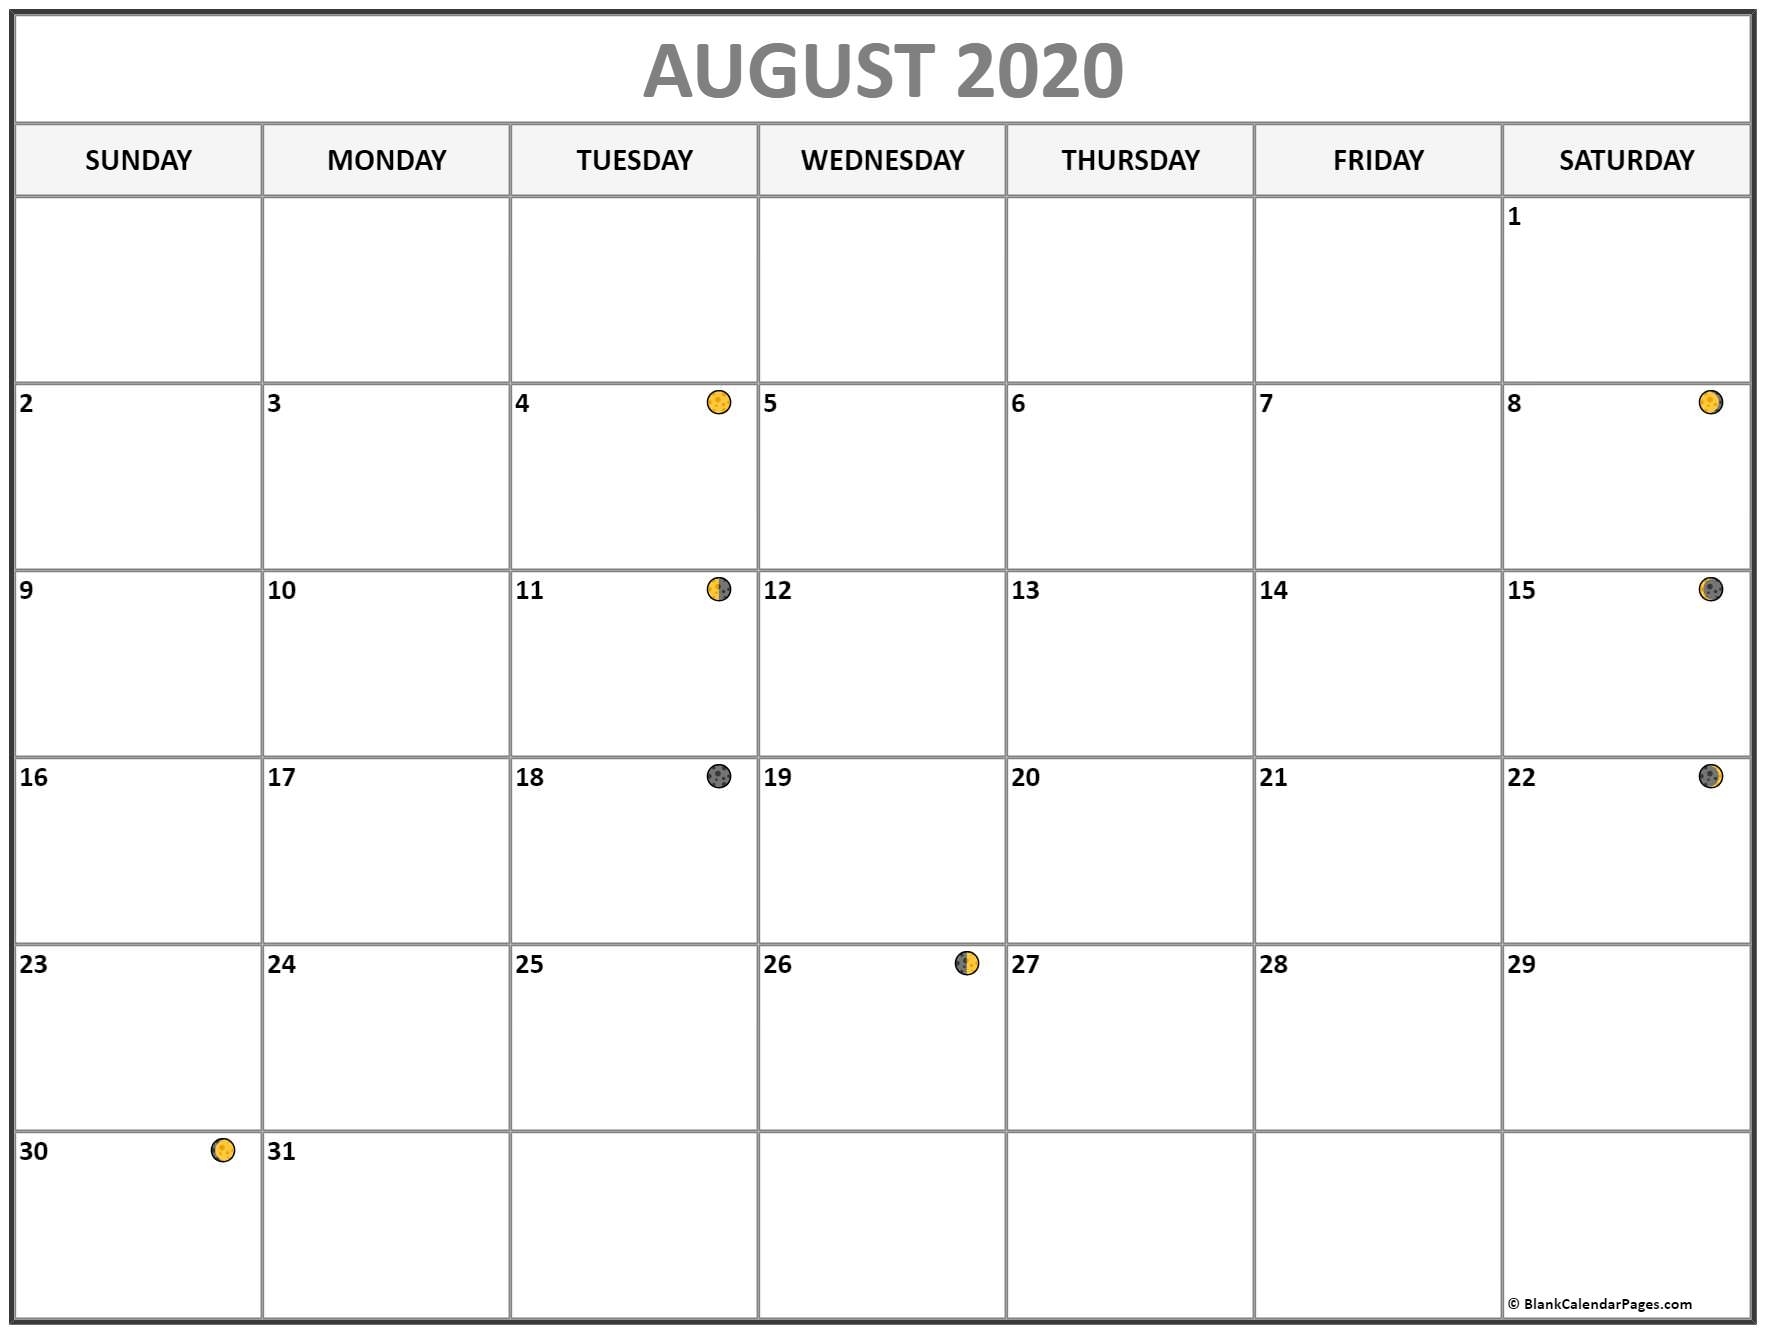 August 2020 Lunar Calendar | Moon Phase Calendar